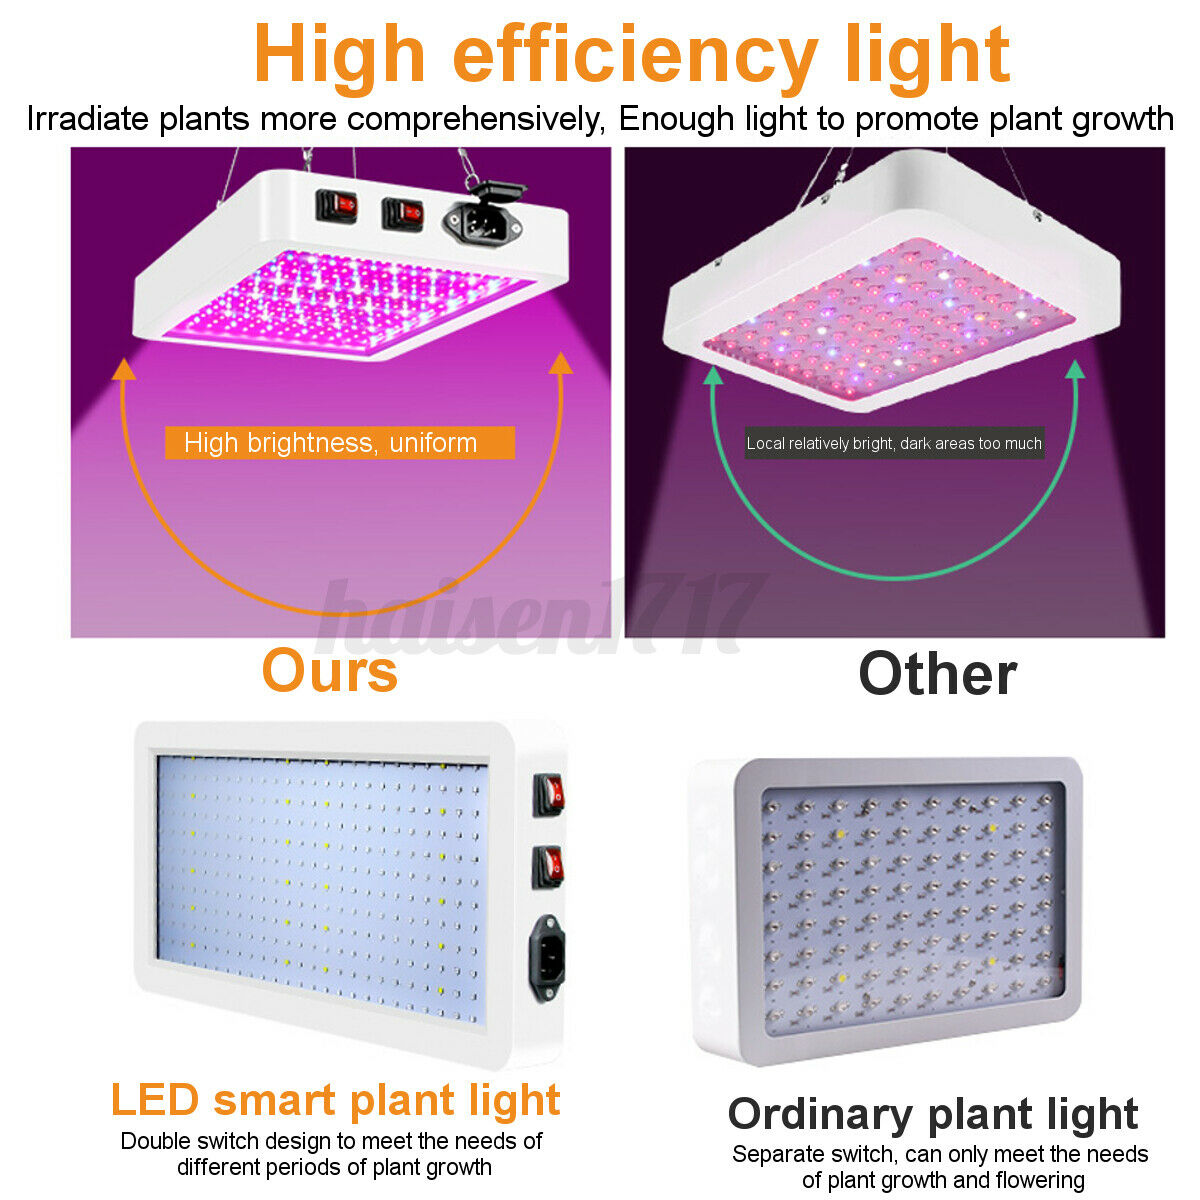 8000W LED Grow Light Plant Lamp Panel Full Spectrum For Indoor Hydroponic Flower